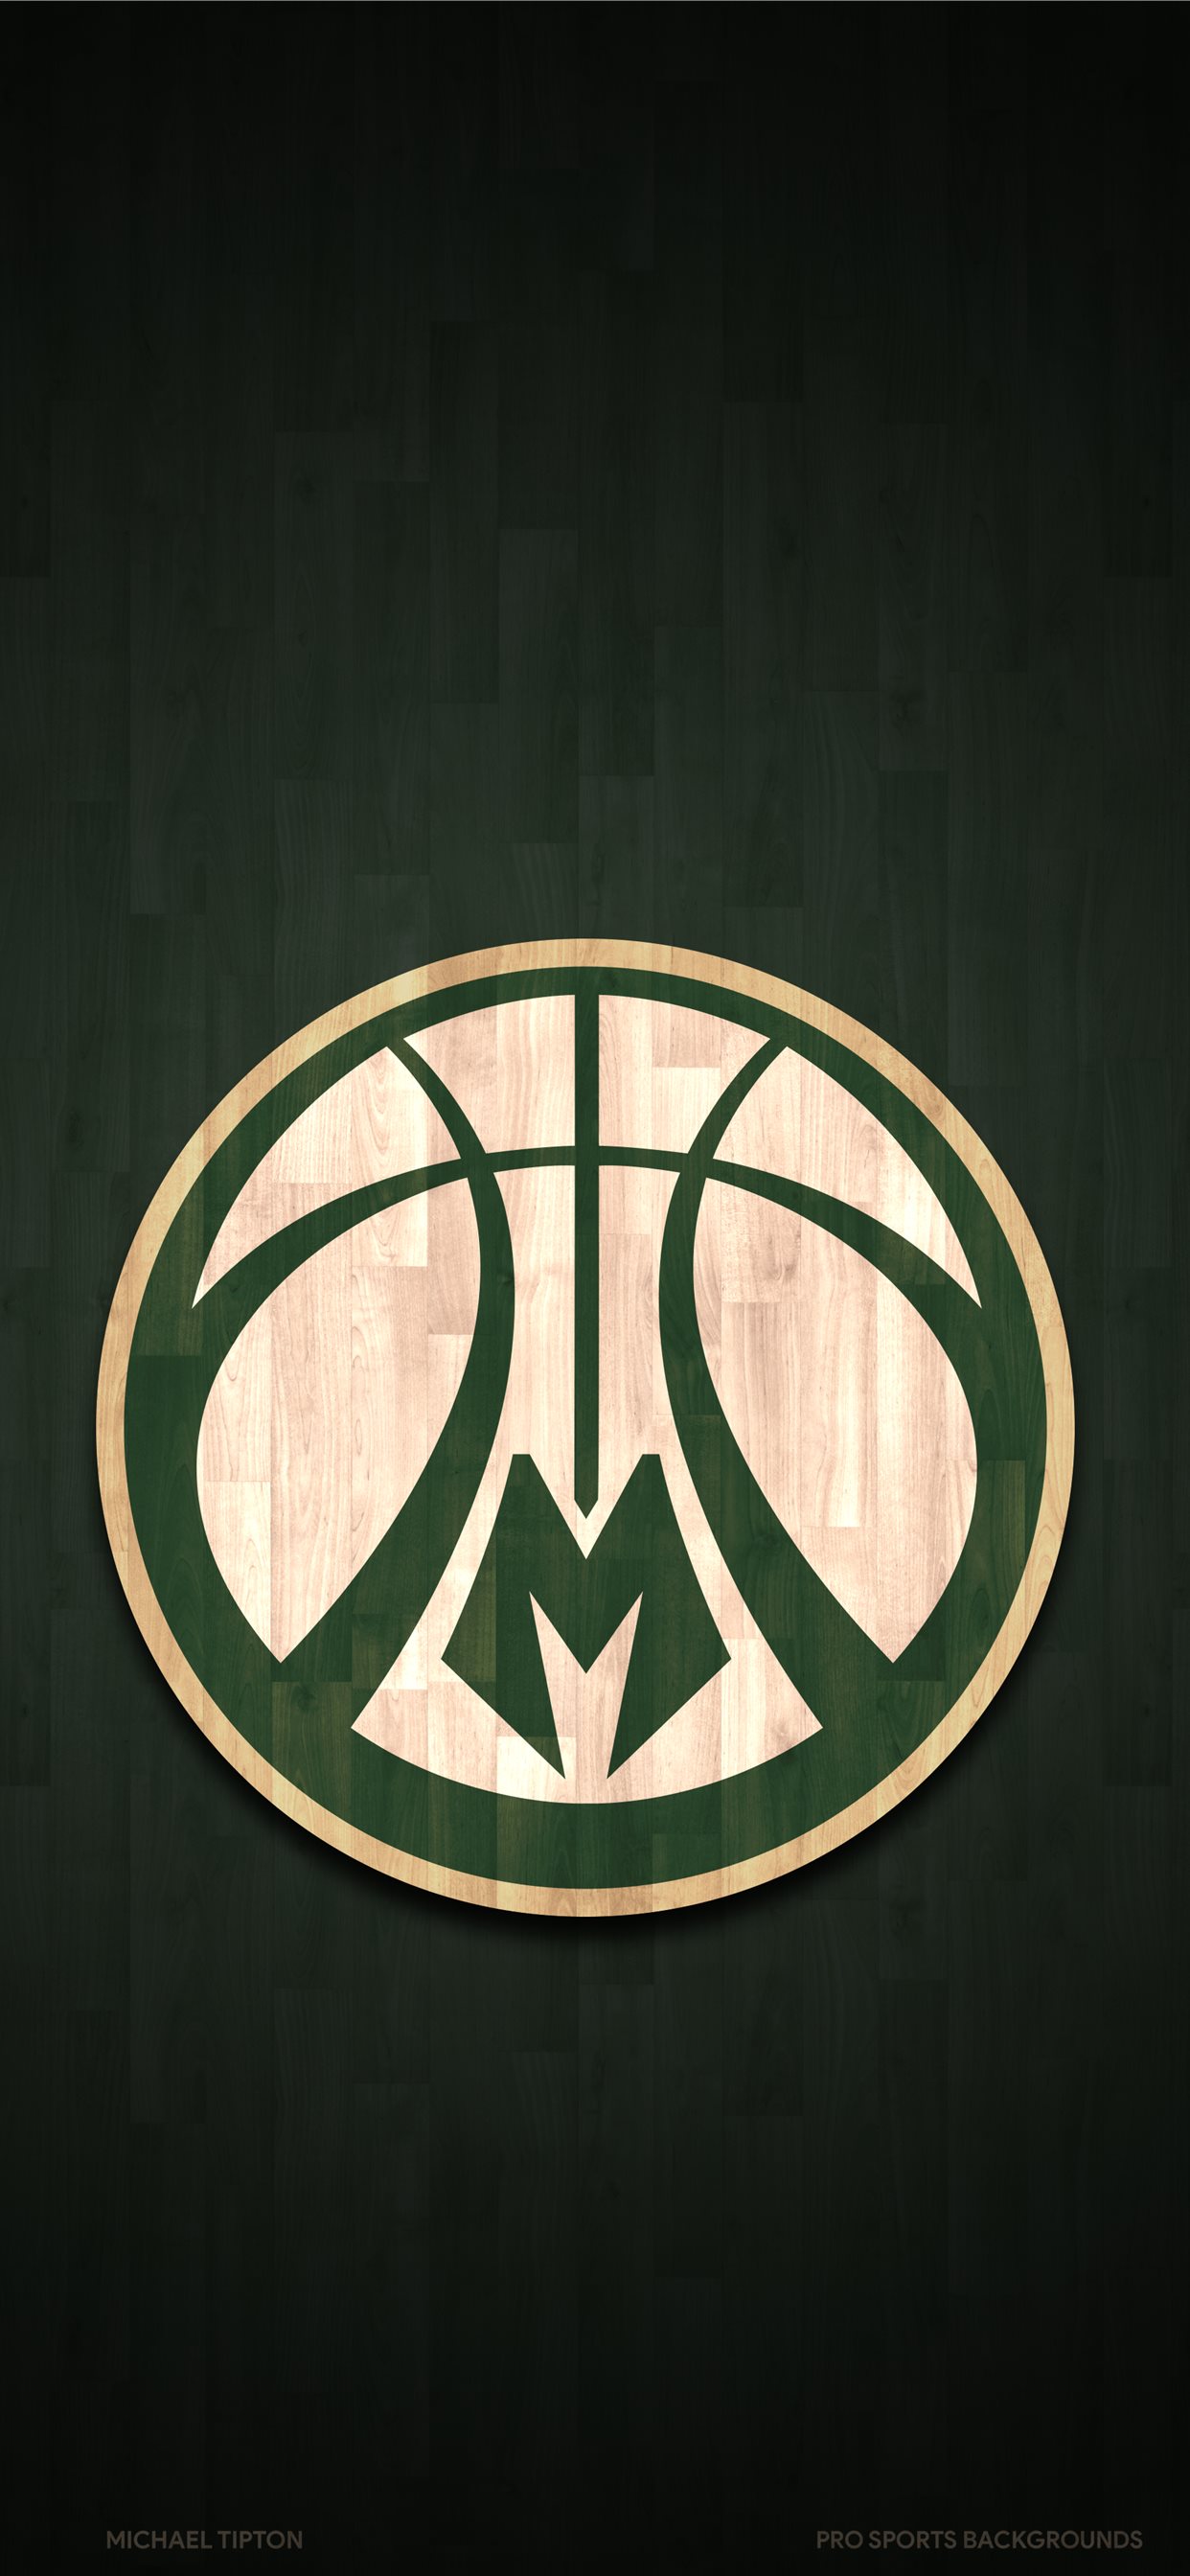 Milwaukee Bucks HD Wallpaper